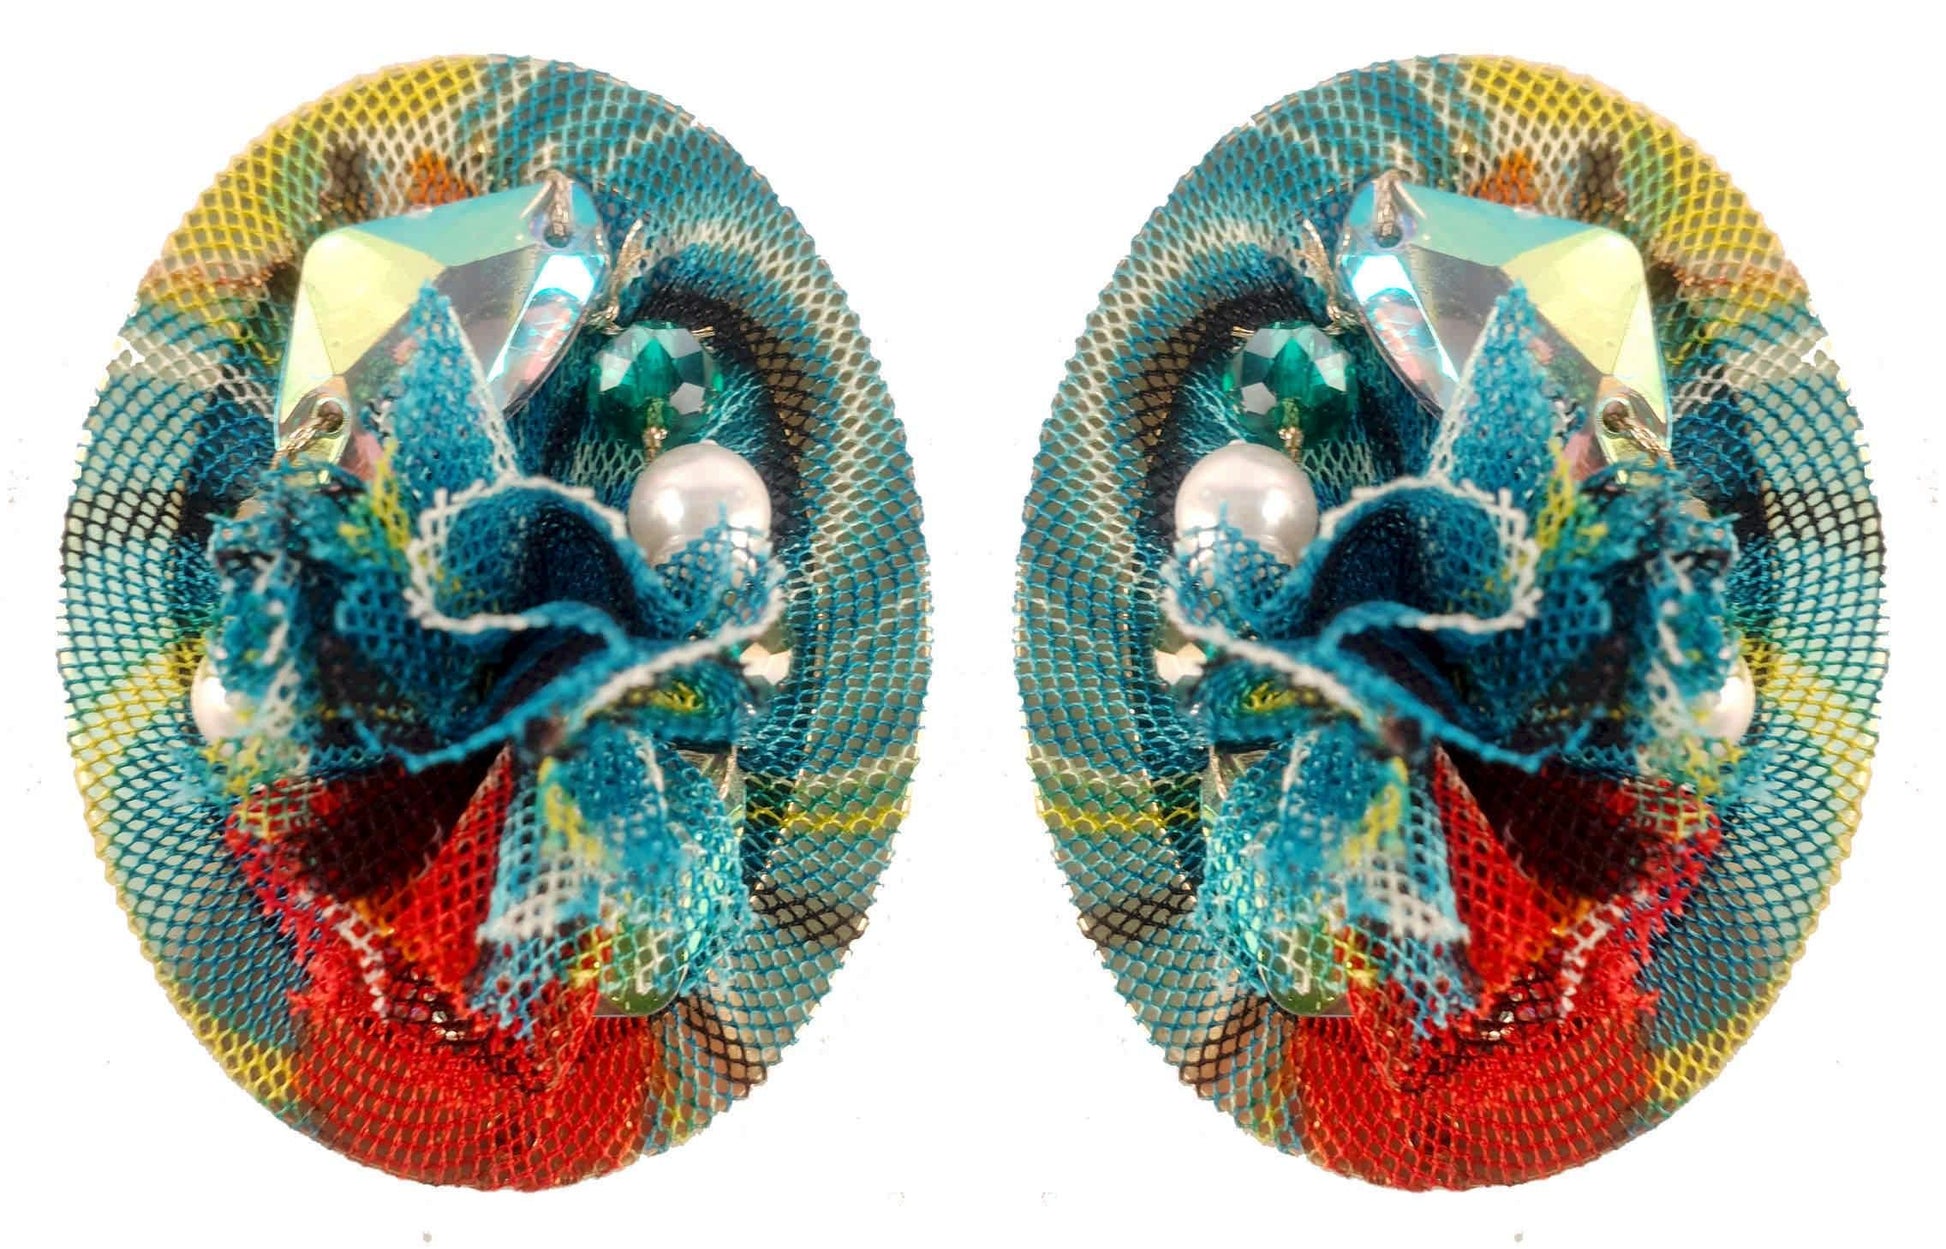 Rhinestones on Printed Net Design Artificial Fashion Dangler Earrings Jhumka for Girls Women, Oval, Turquoise